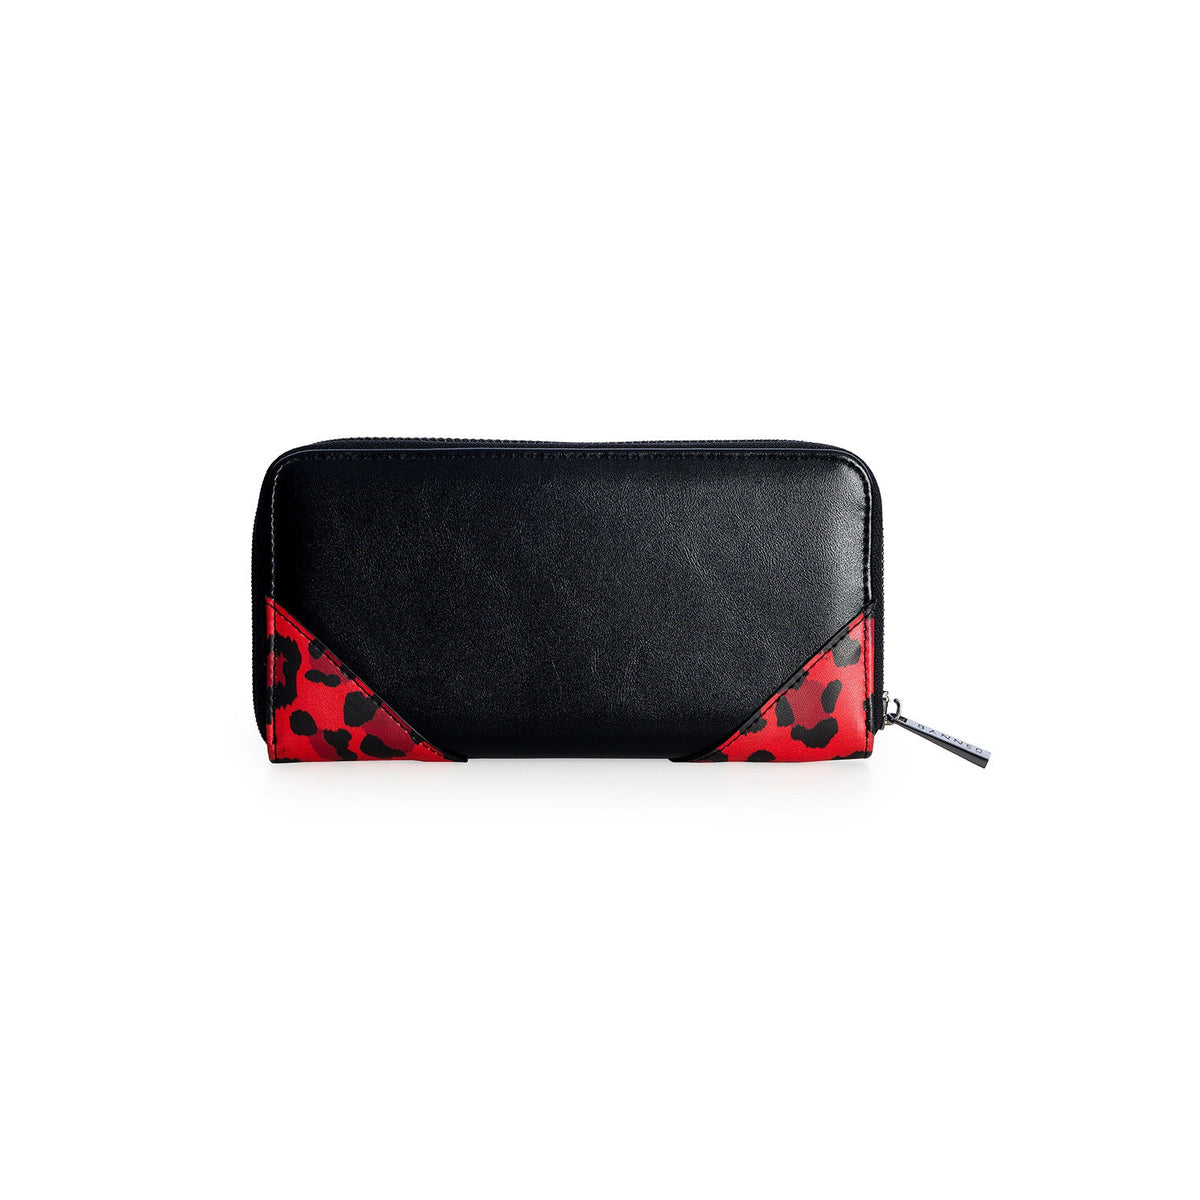 Rockabilly Rose Womens Wallet-Womens Handbags, Purses &amp; Wallets-Scarlett Dawn